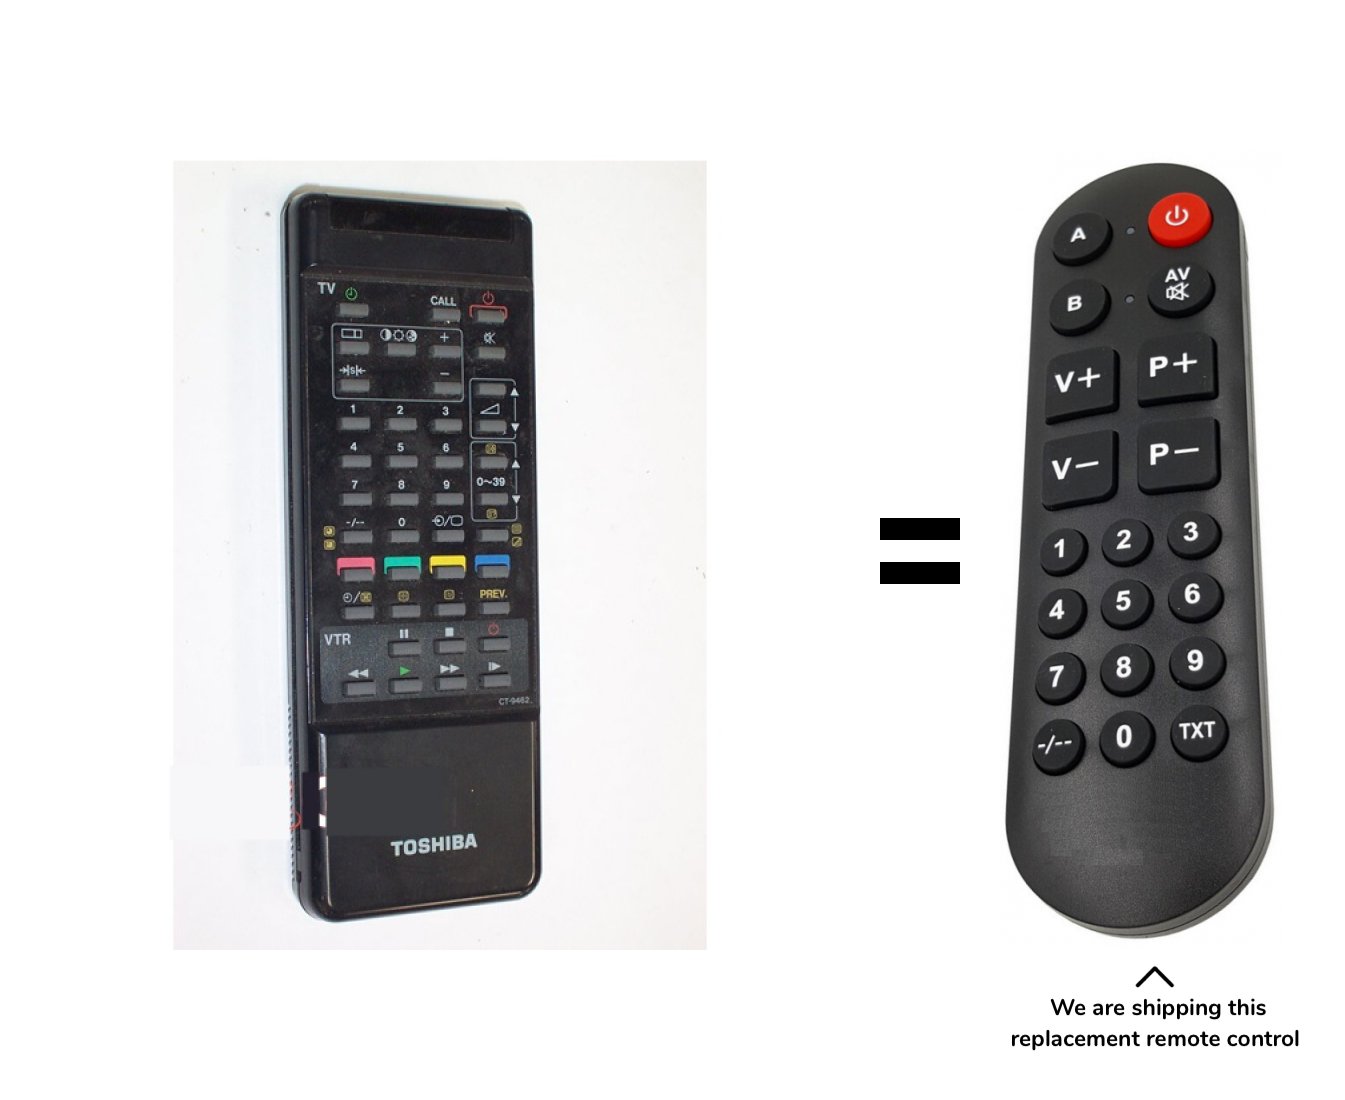 Toshiba 1400RB remote control for seniors